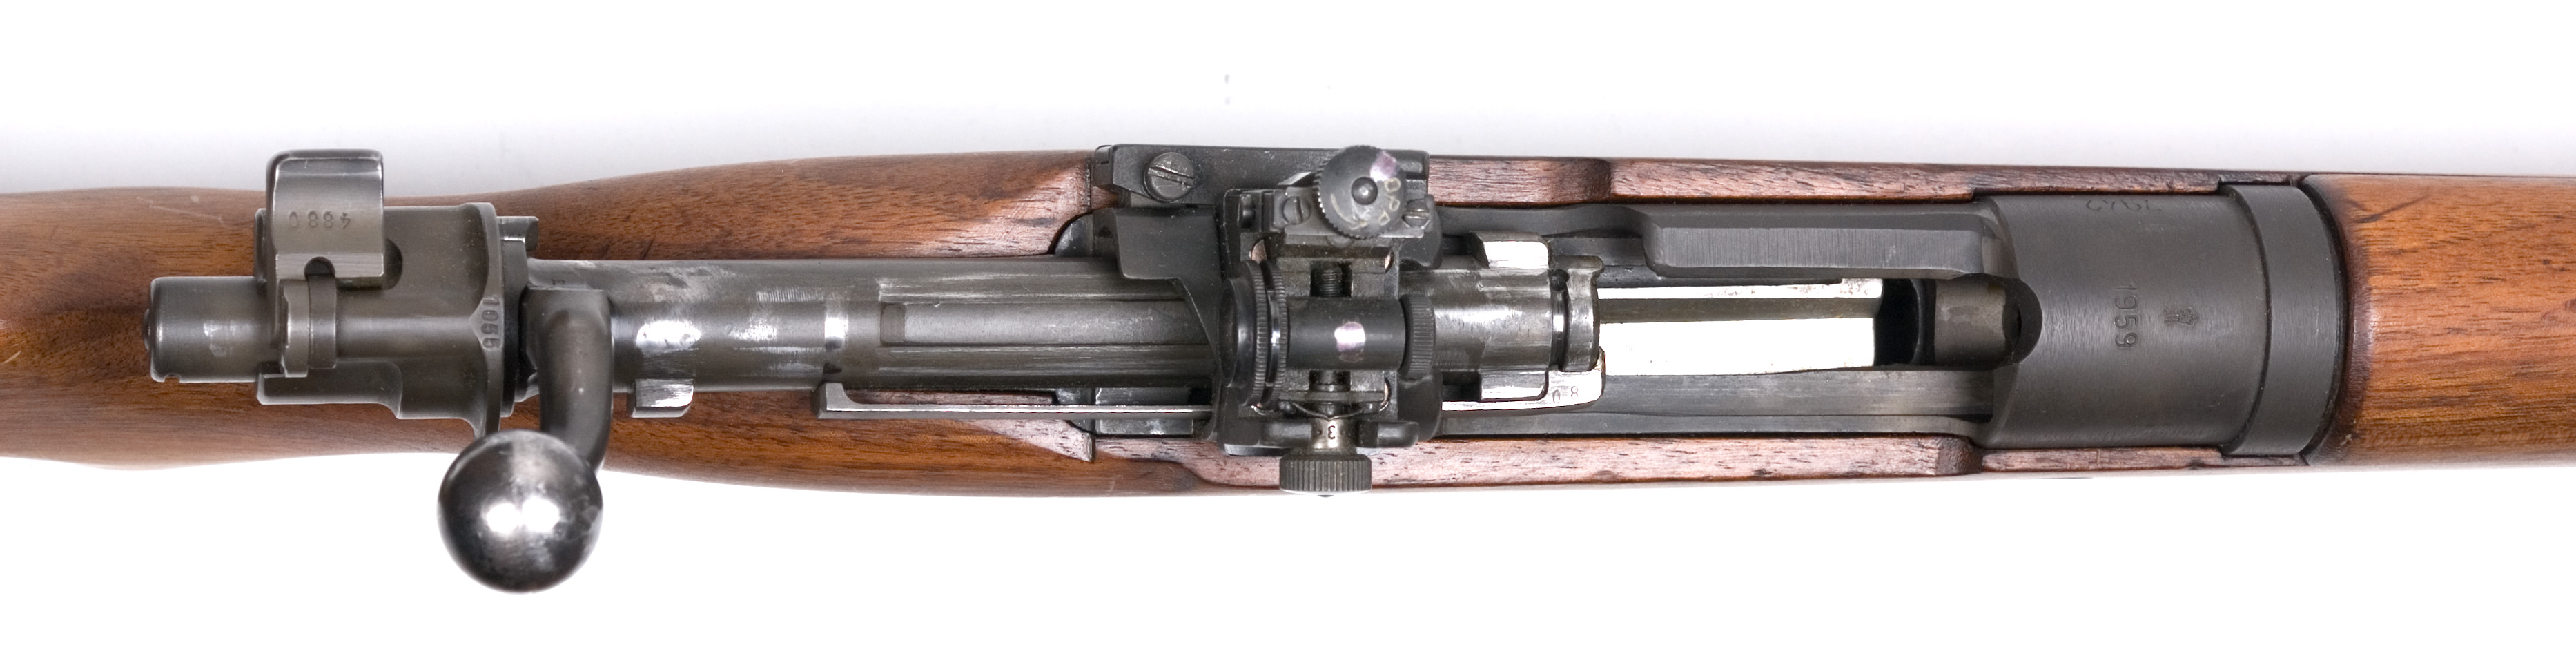 ./guns/rifle/bilder/Rifle-Kongsberg-Mauser-M59-7942-3.jpg